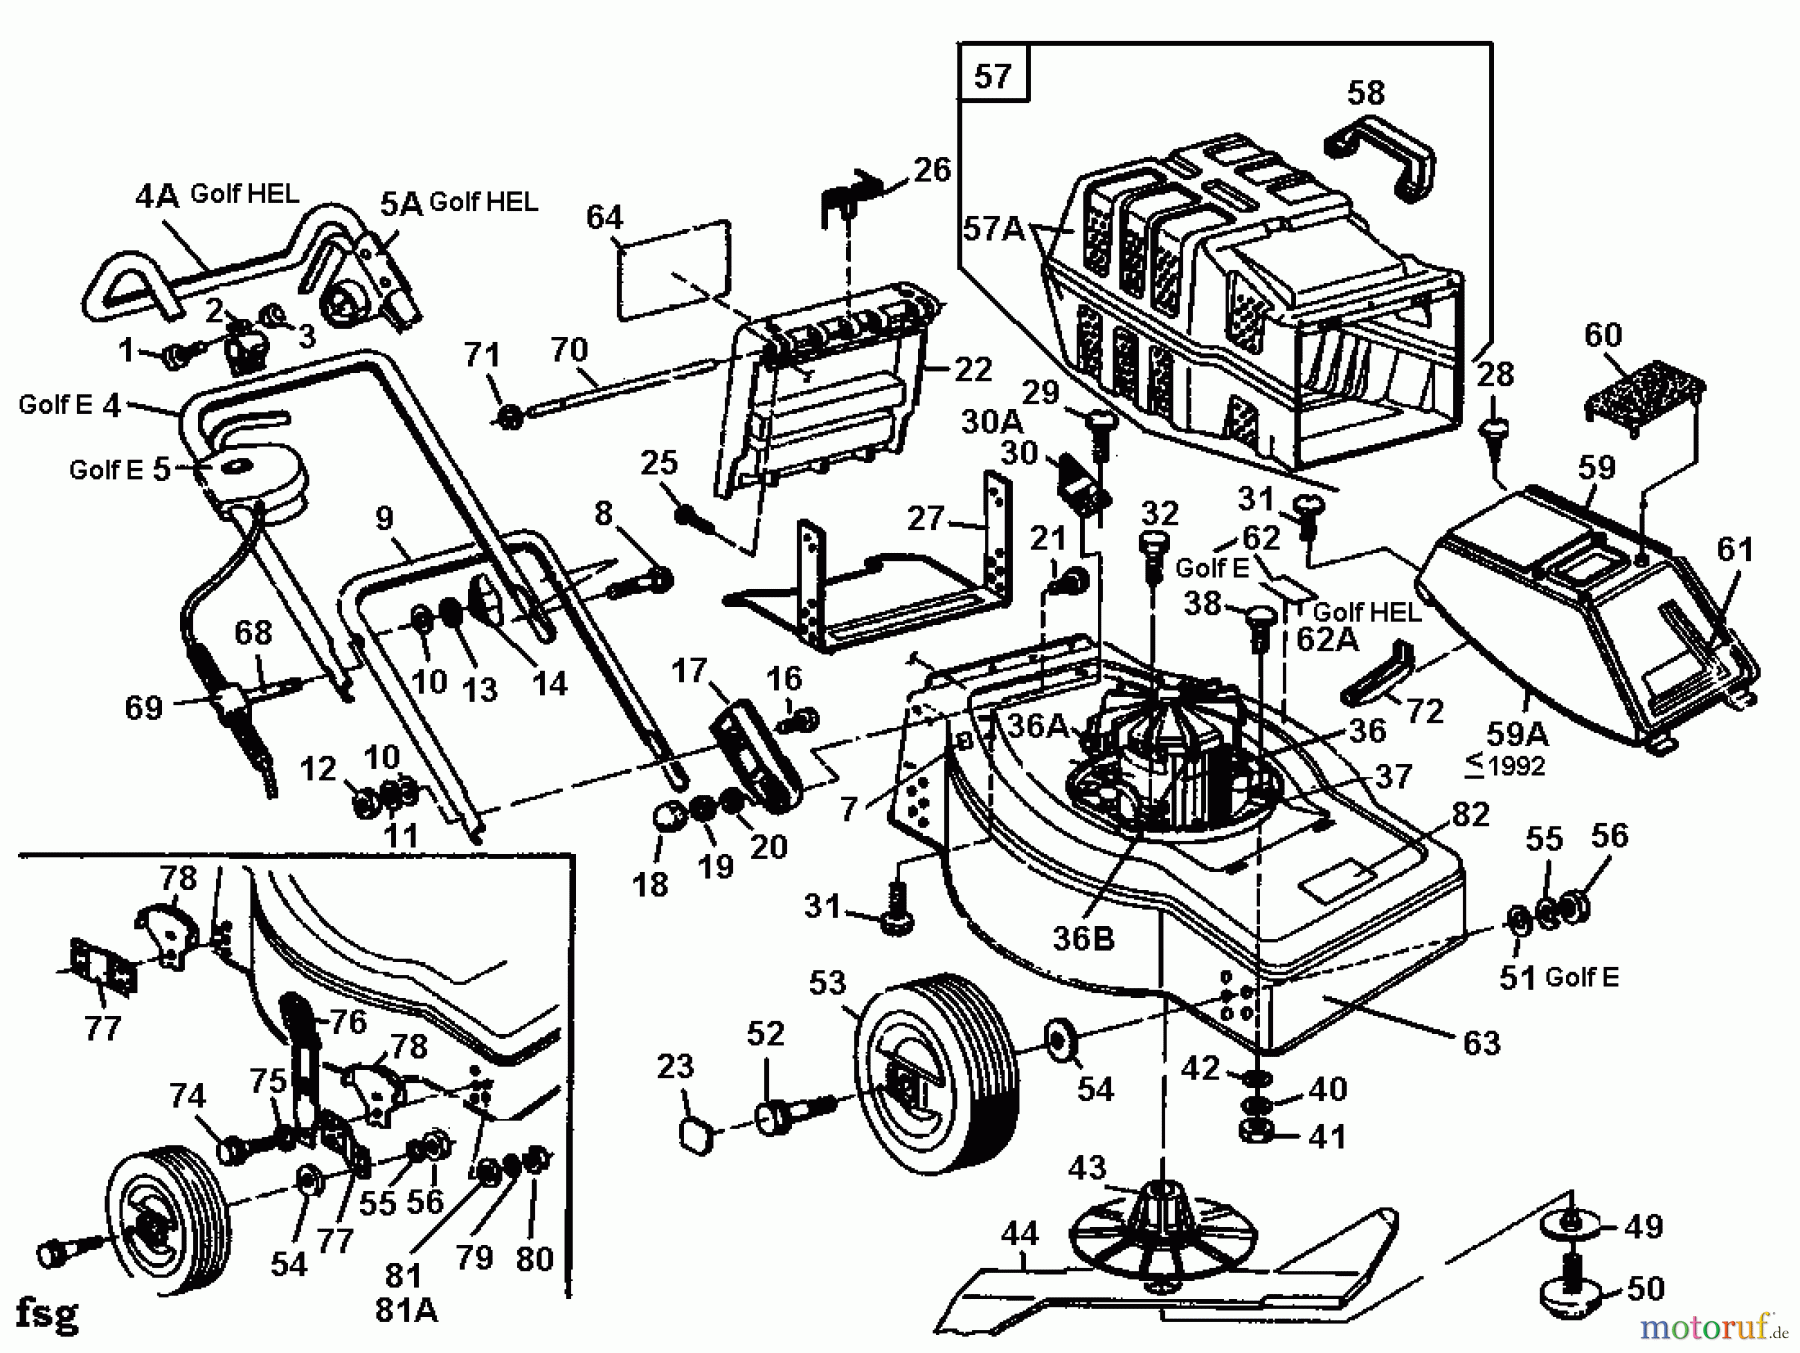  Golf Electric mower E 02881.06  (1991) Basic machine